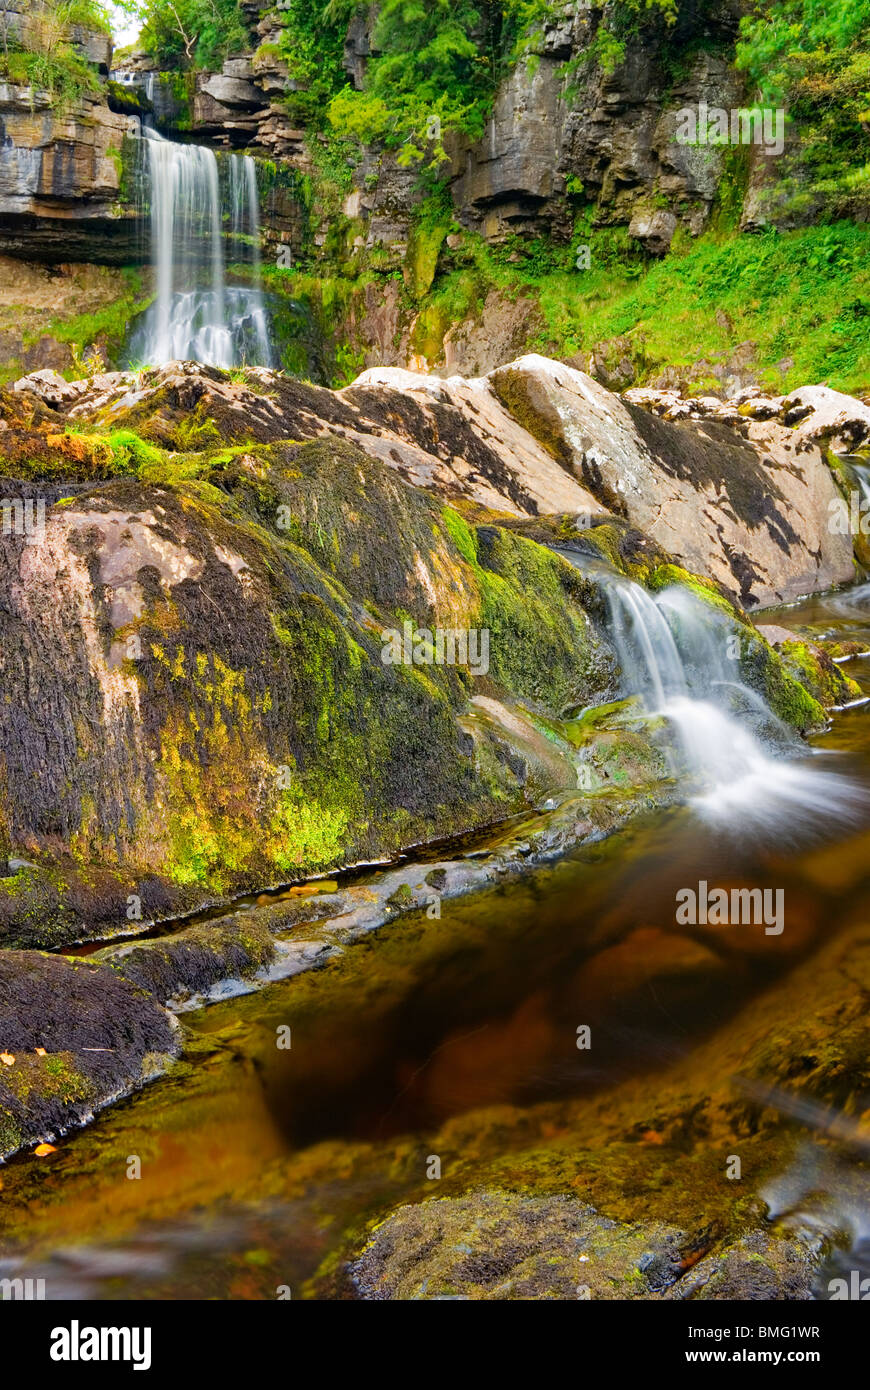 Thornton Force Waterfall, Ingleton, orkshire Dales National Park, UK England Stock Photo